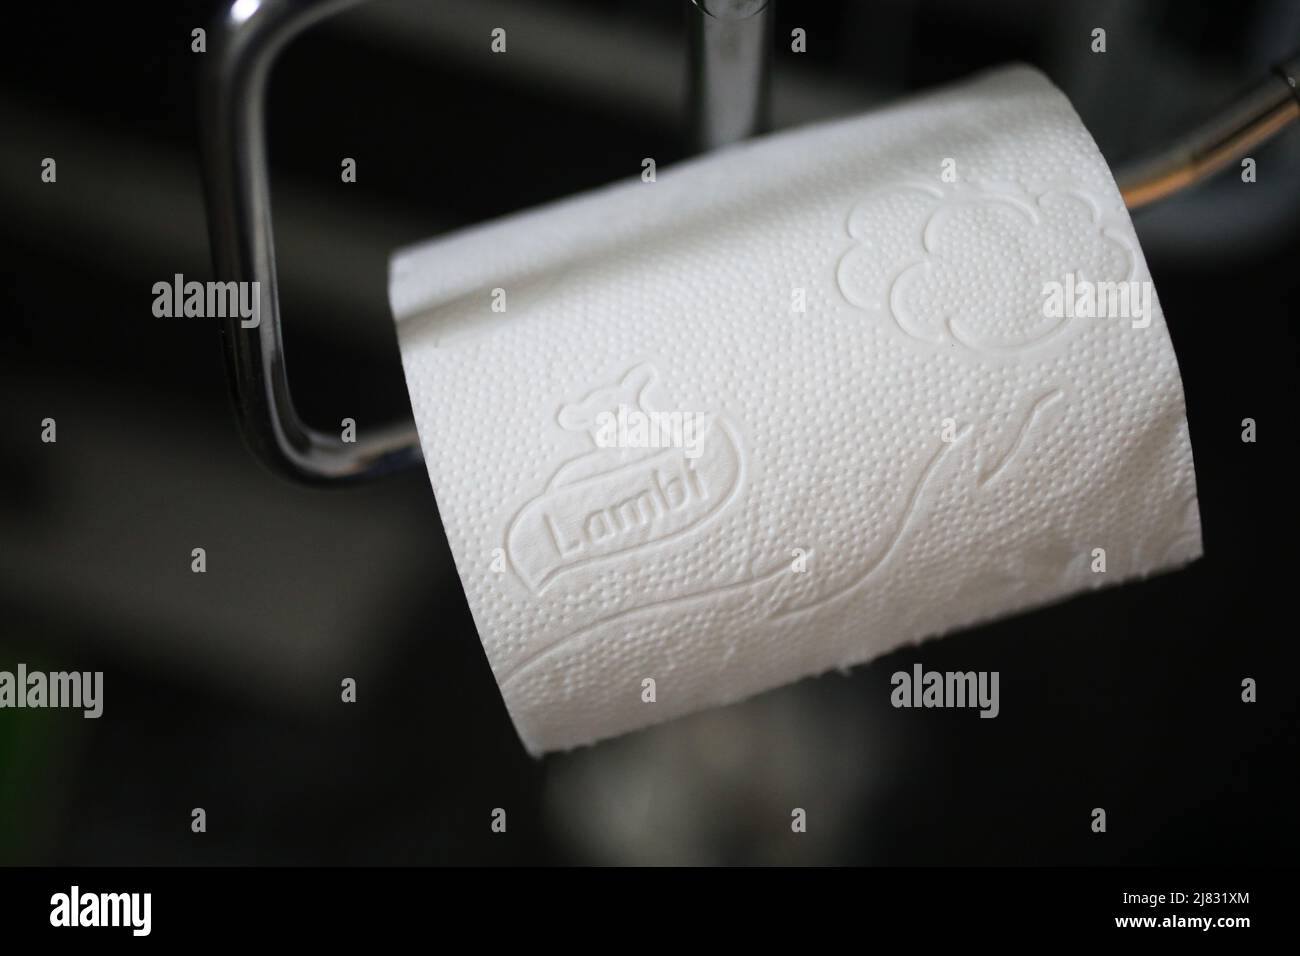 Lambi toilet paper in a bathroom. Stock Photo